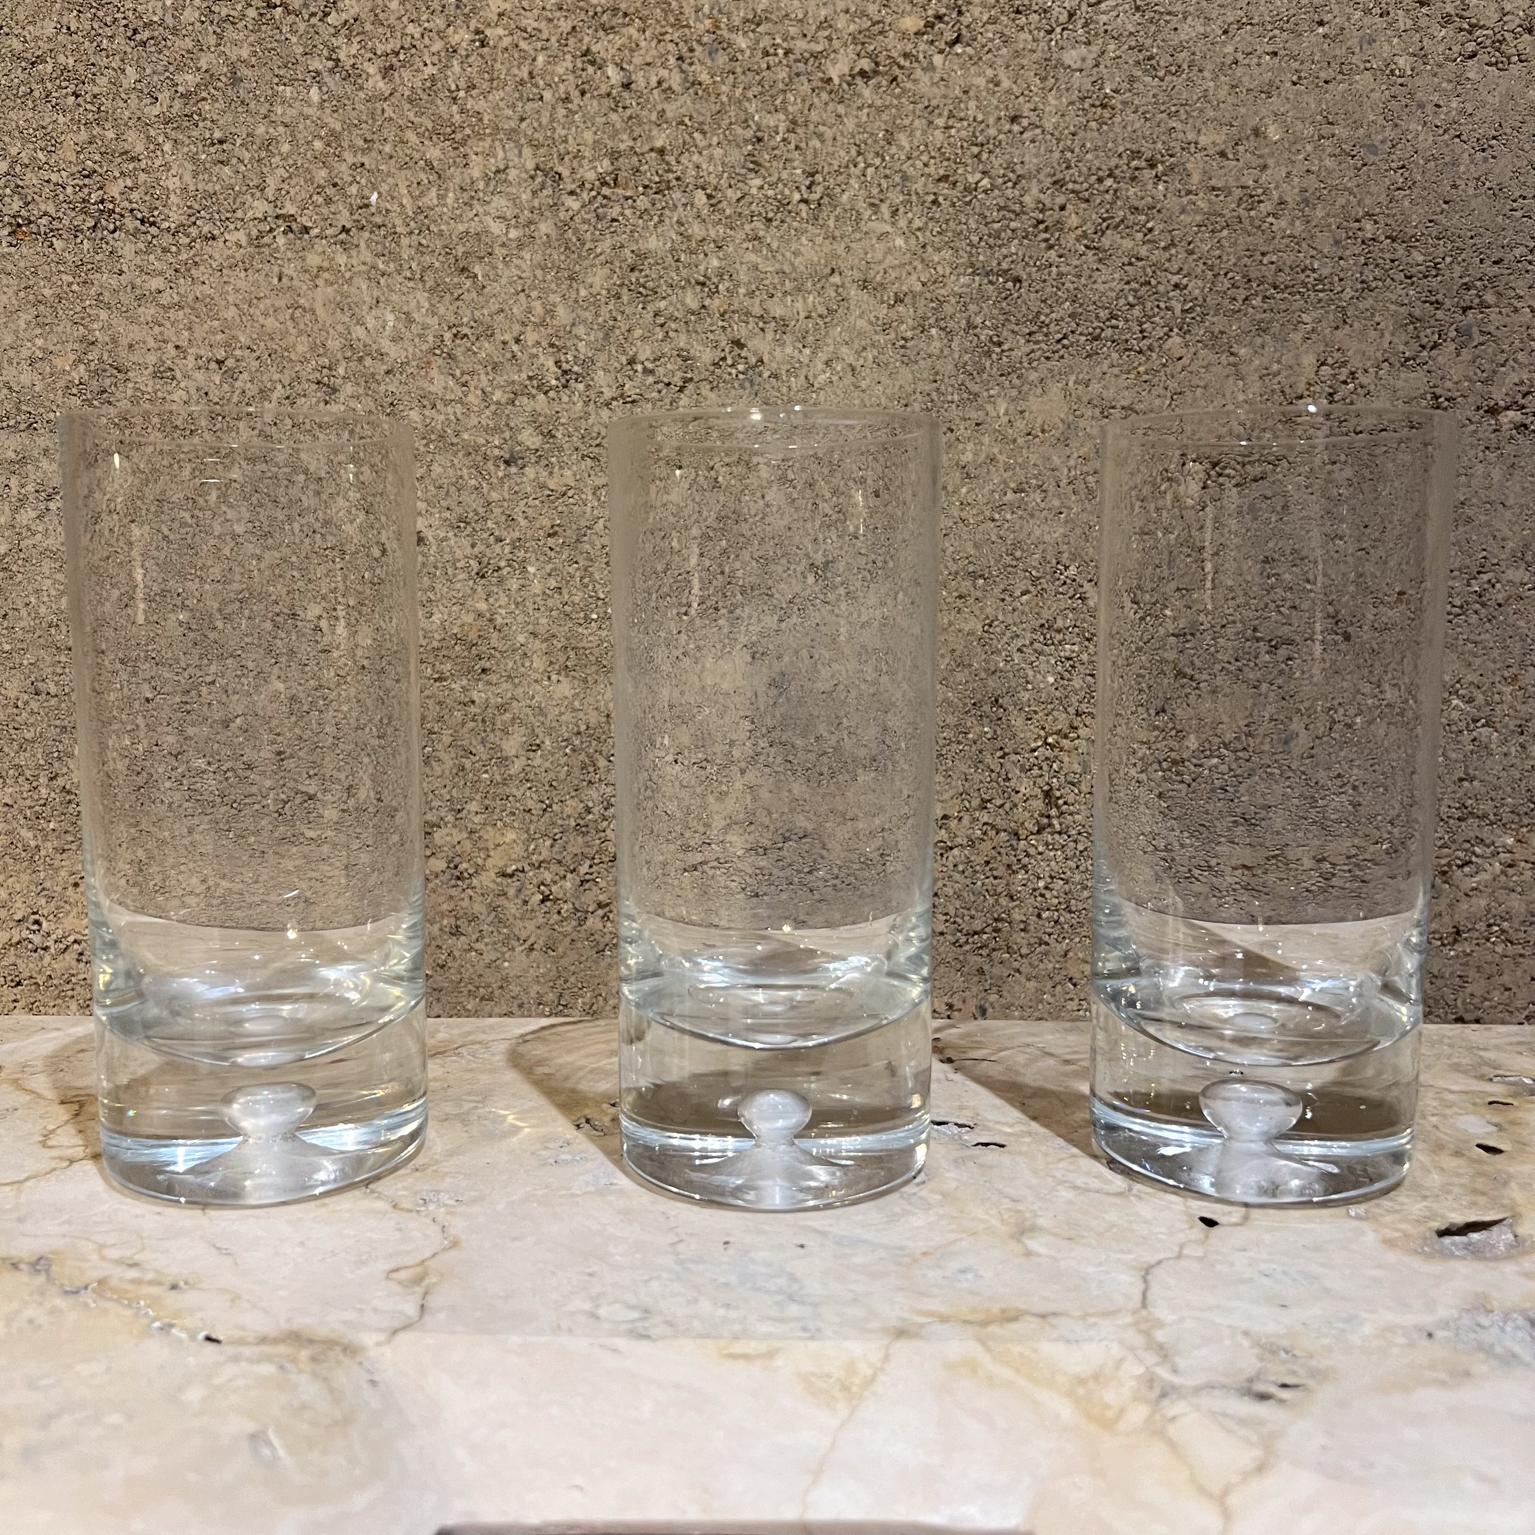 
MCM Glasses Barware Tumbler Highball Bottom Bubble design
 6.13 h x 2.75 diameter
Preowned vintage
Refer to images

